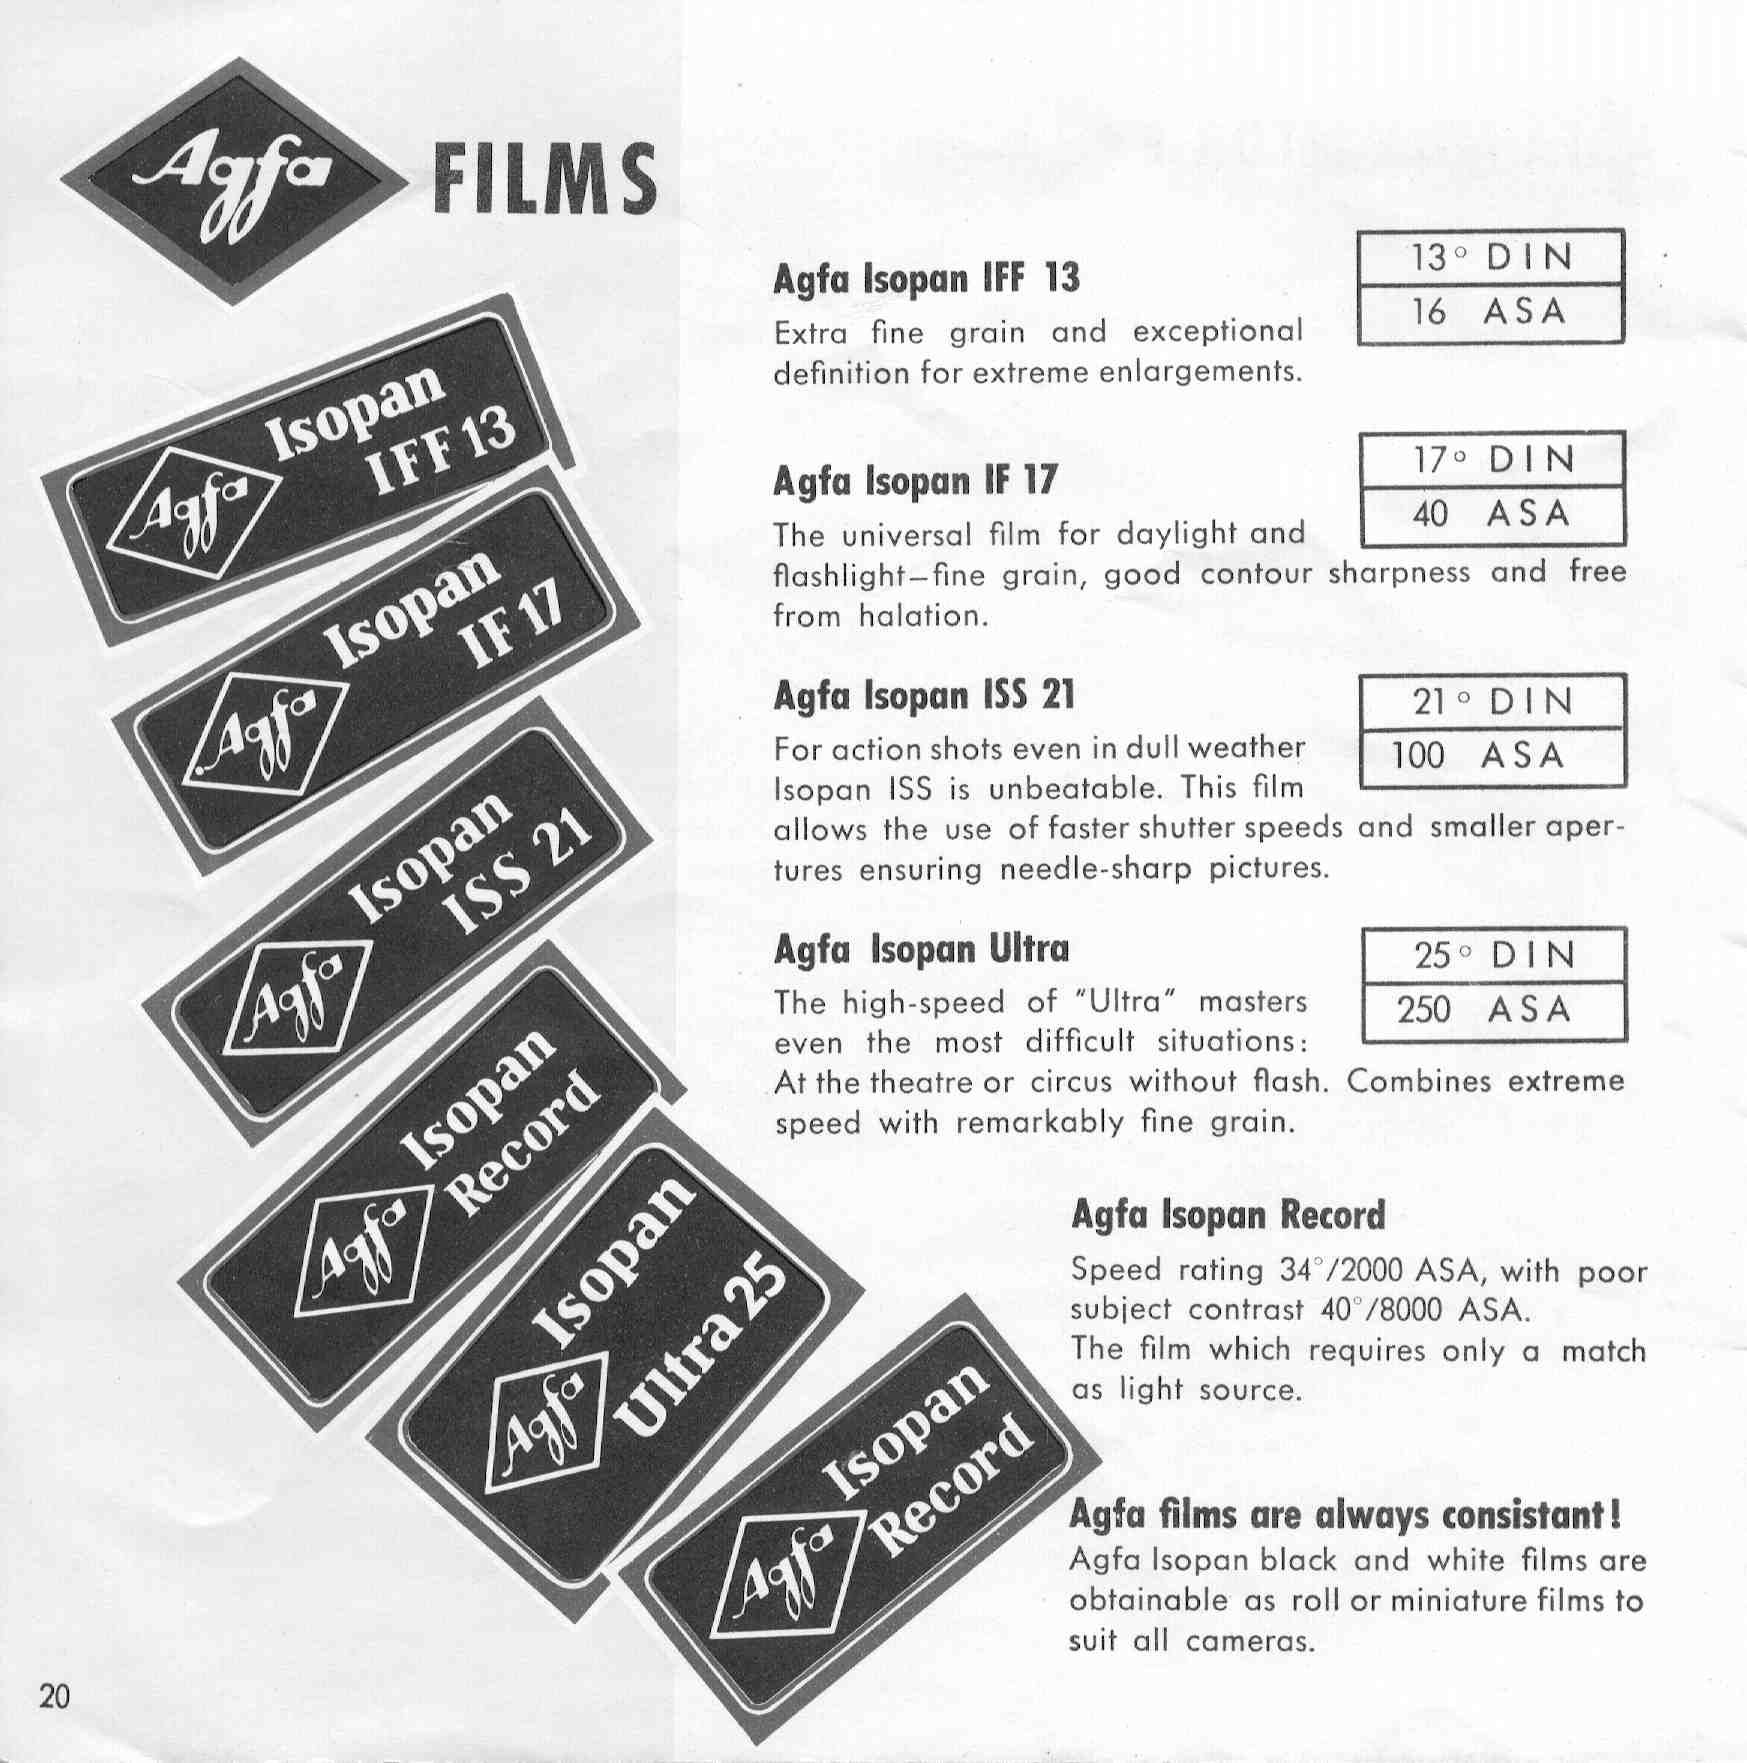 Agfa Isopan Films 1960 | Photographic Materials | Pinterest | Films ...